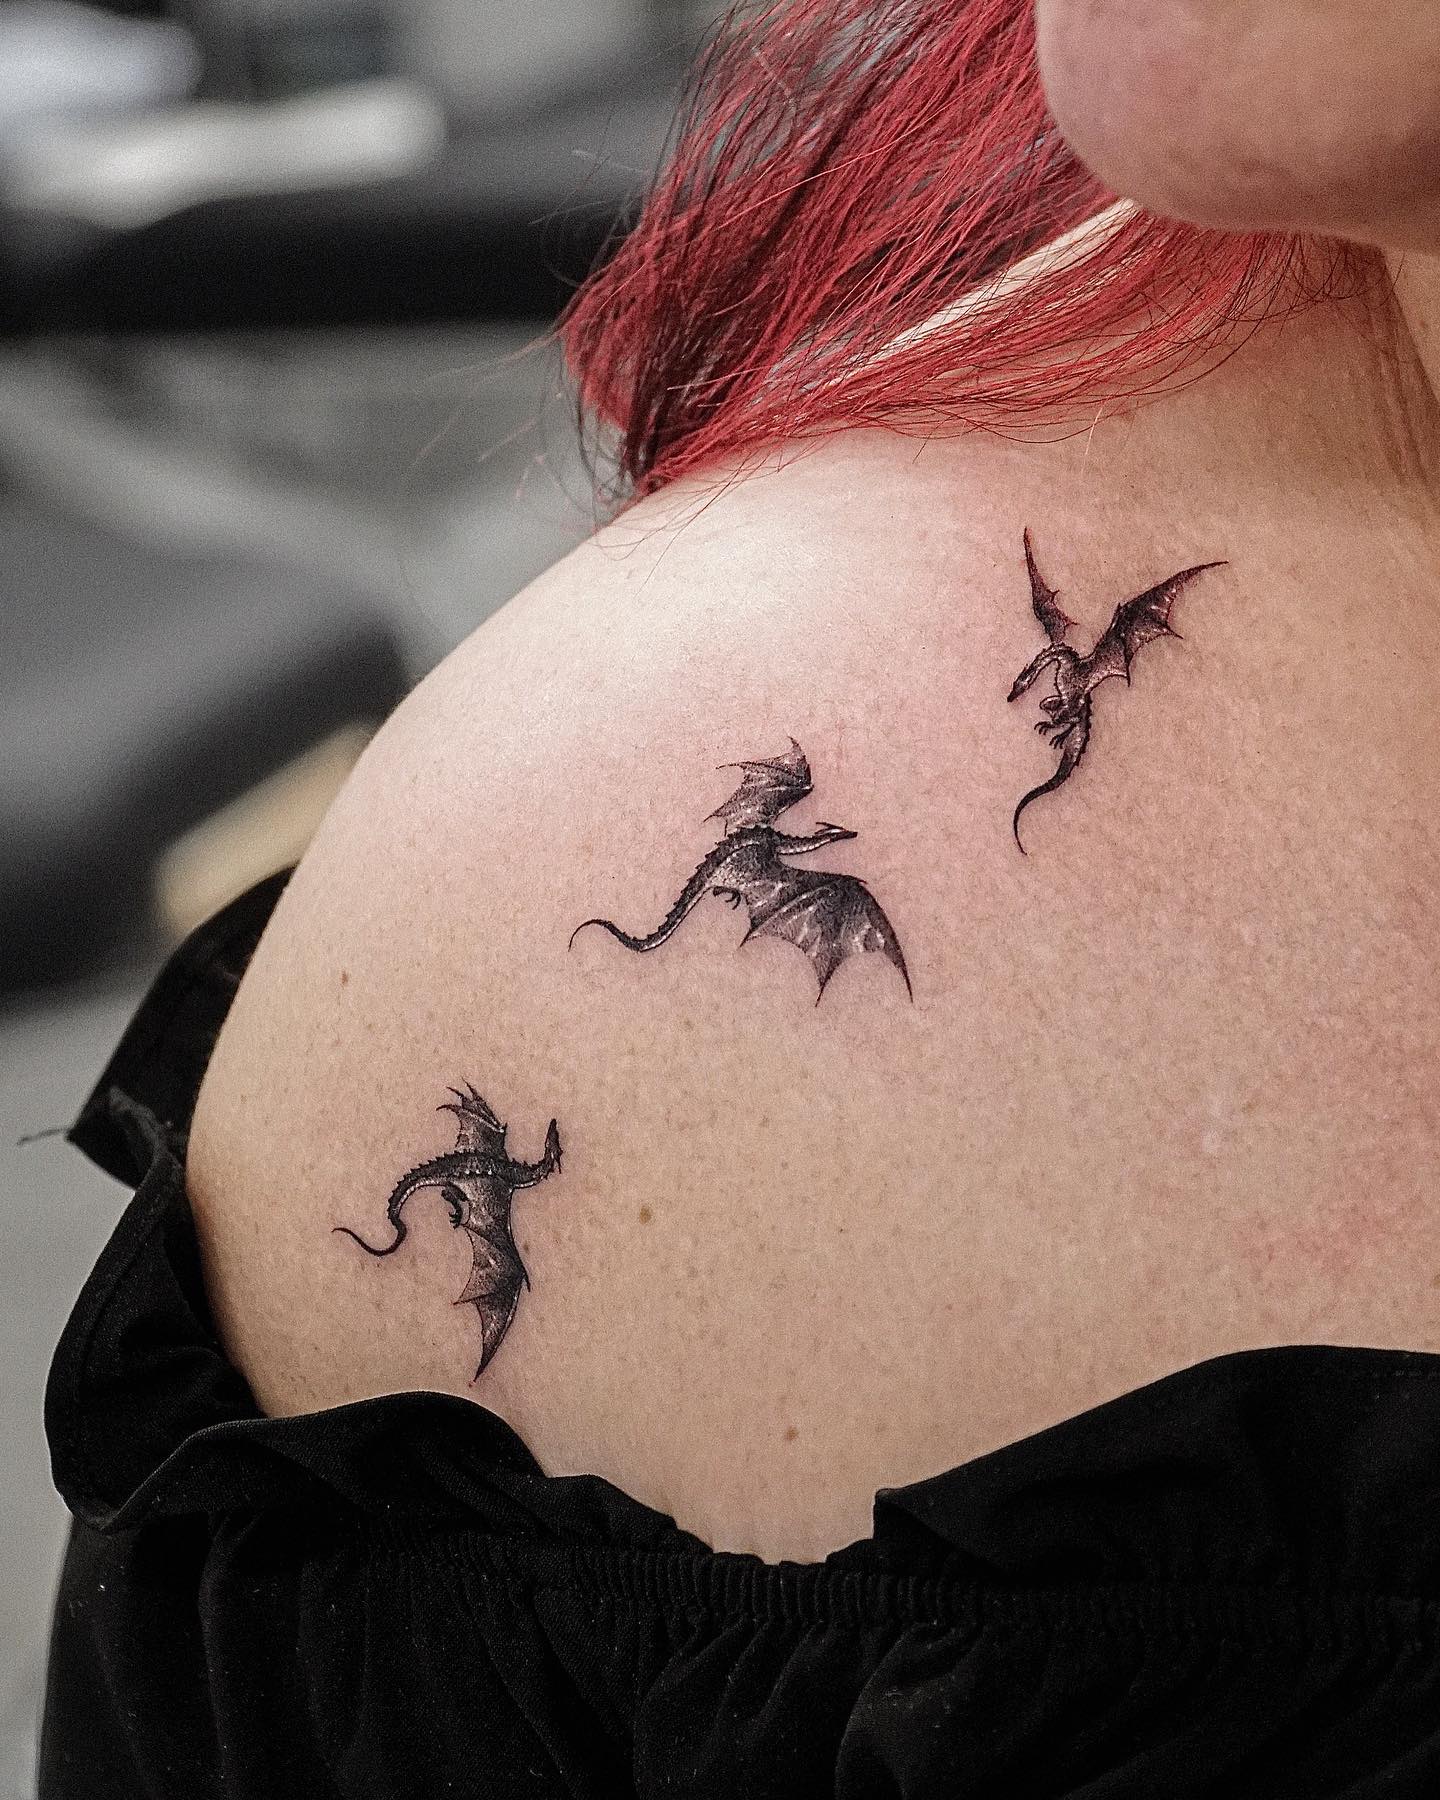 Three Small Dragons Tattoo on Shoulder